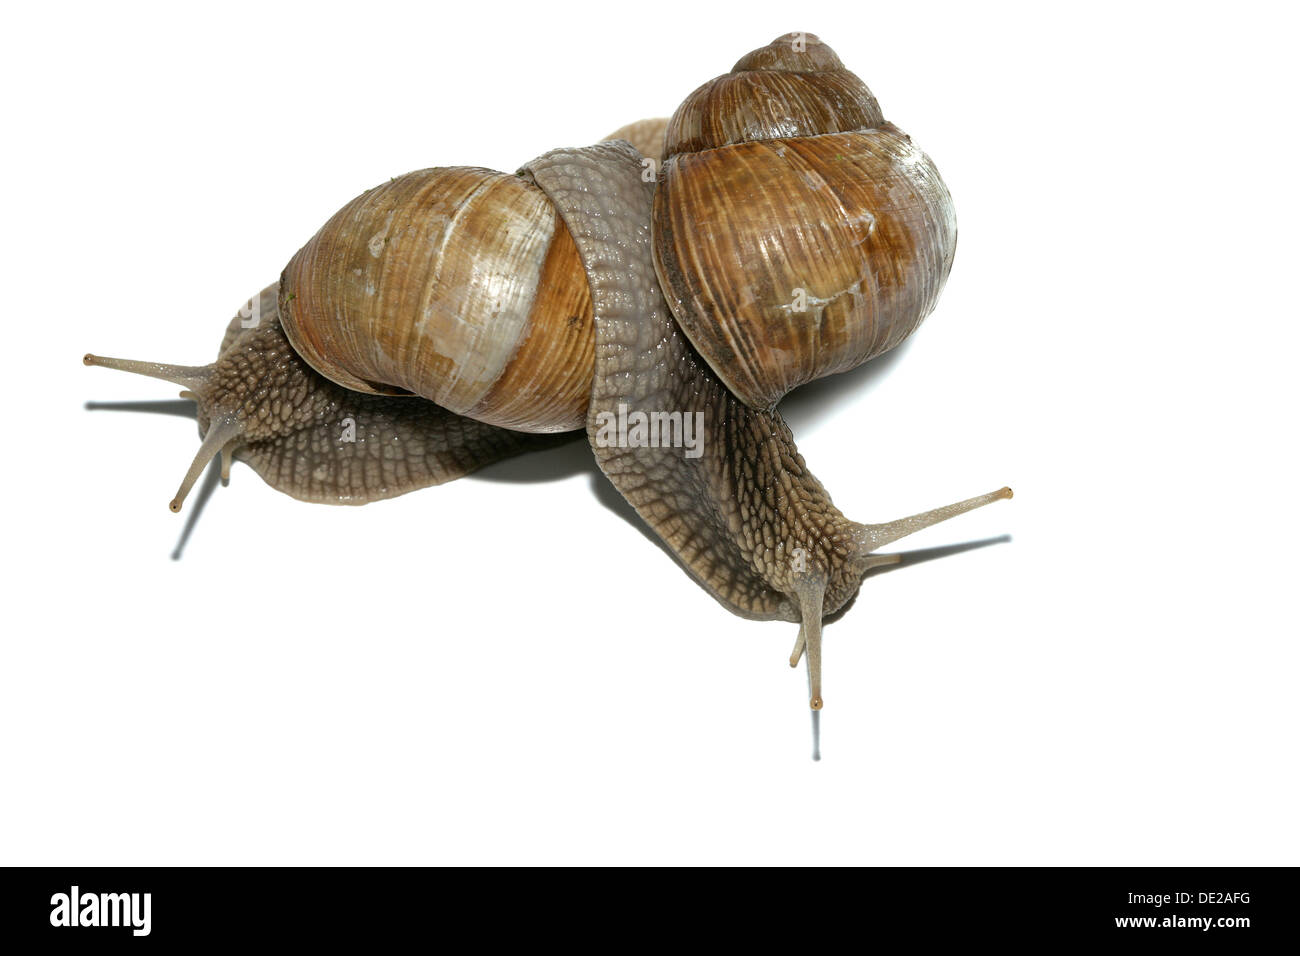 Burgundy snails, Roman snails, edible snails or escargots (Helix pomatia), mating Stock Photo